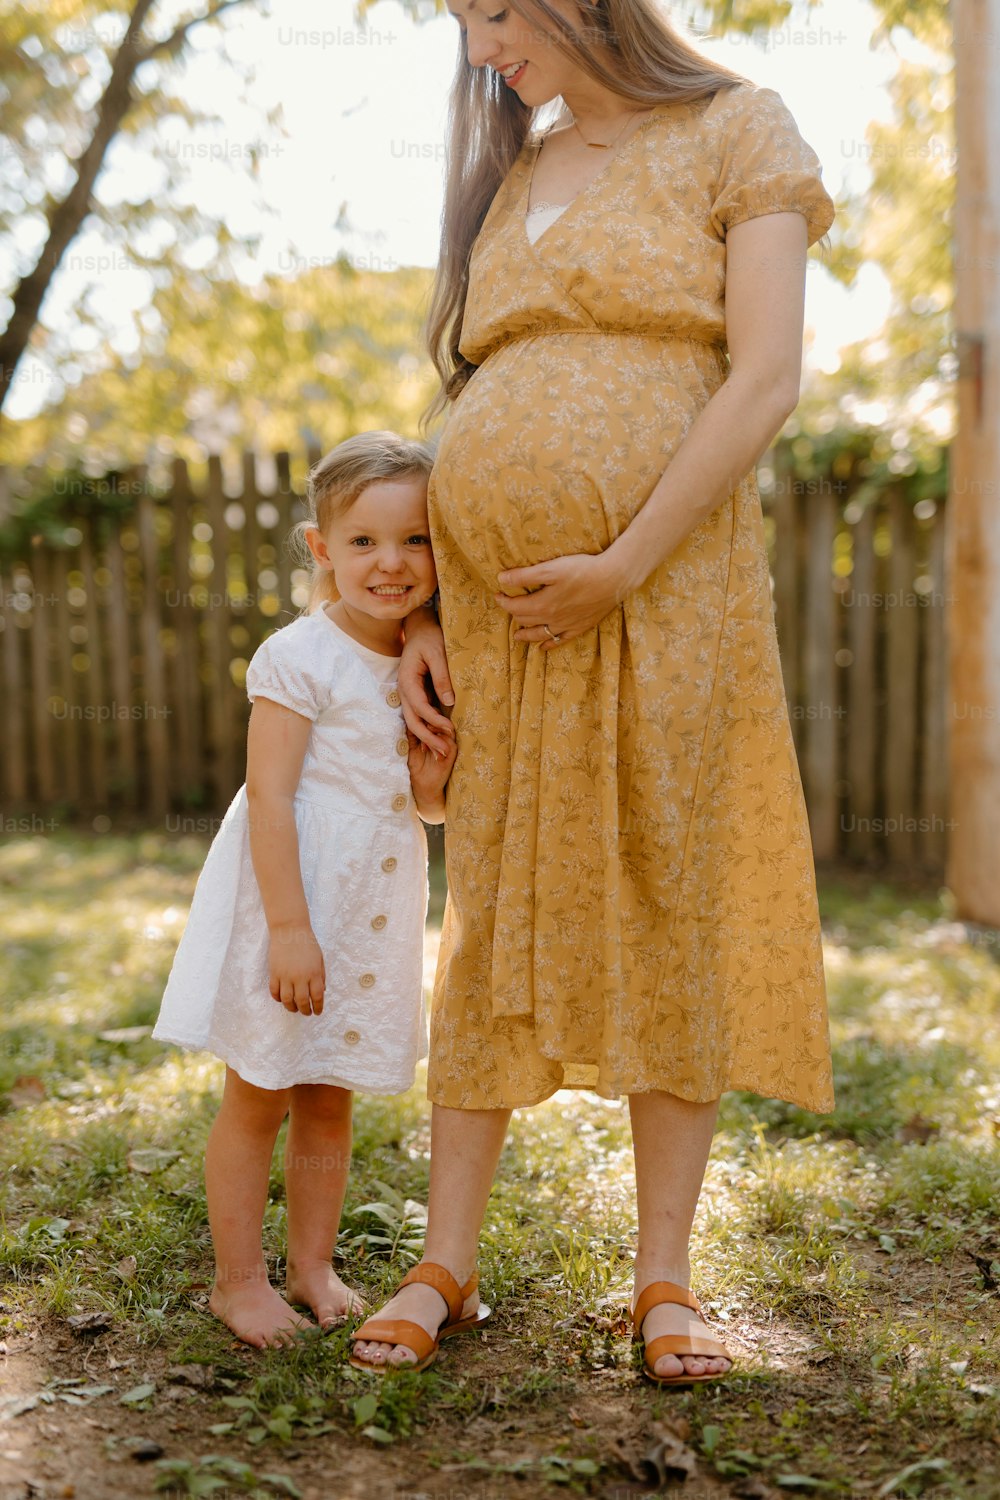 Una donna incinta in piedi accanto a una bambina